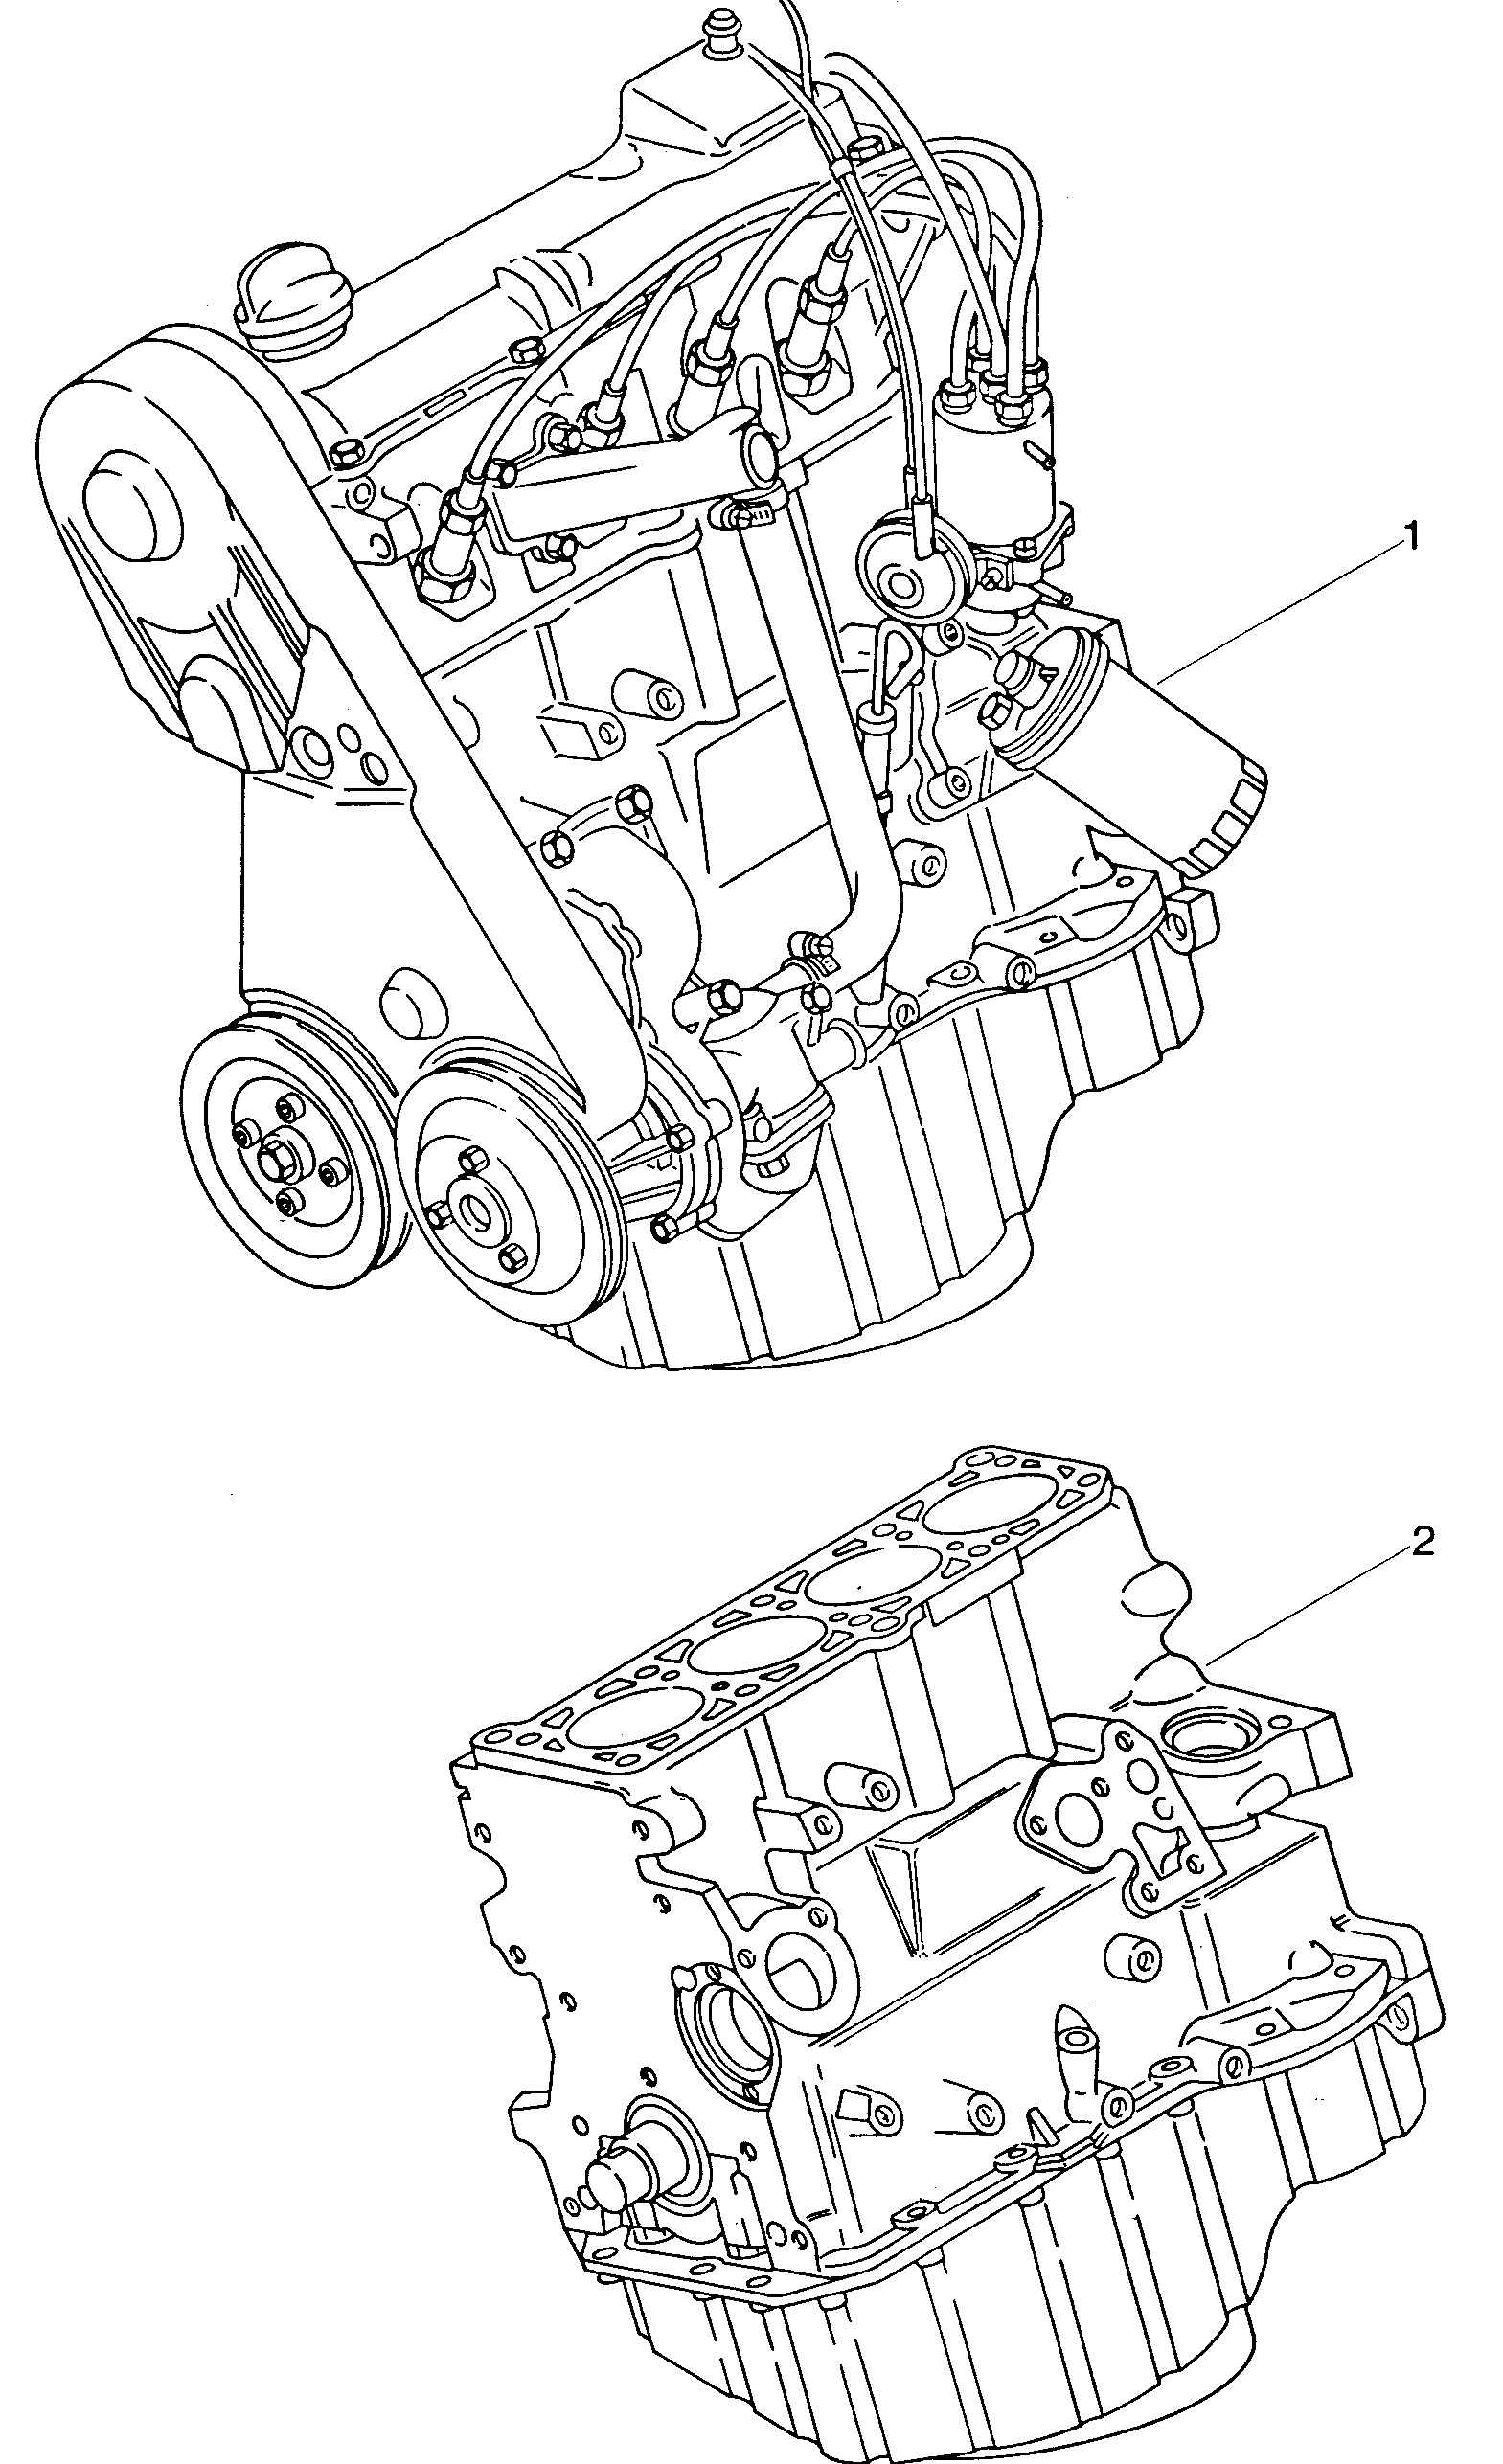 short engine with crankshaft,<br>pistons, oil pump and oil sump  - Mod.181 / Iltis - ilt